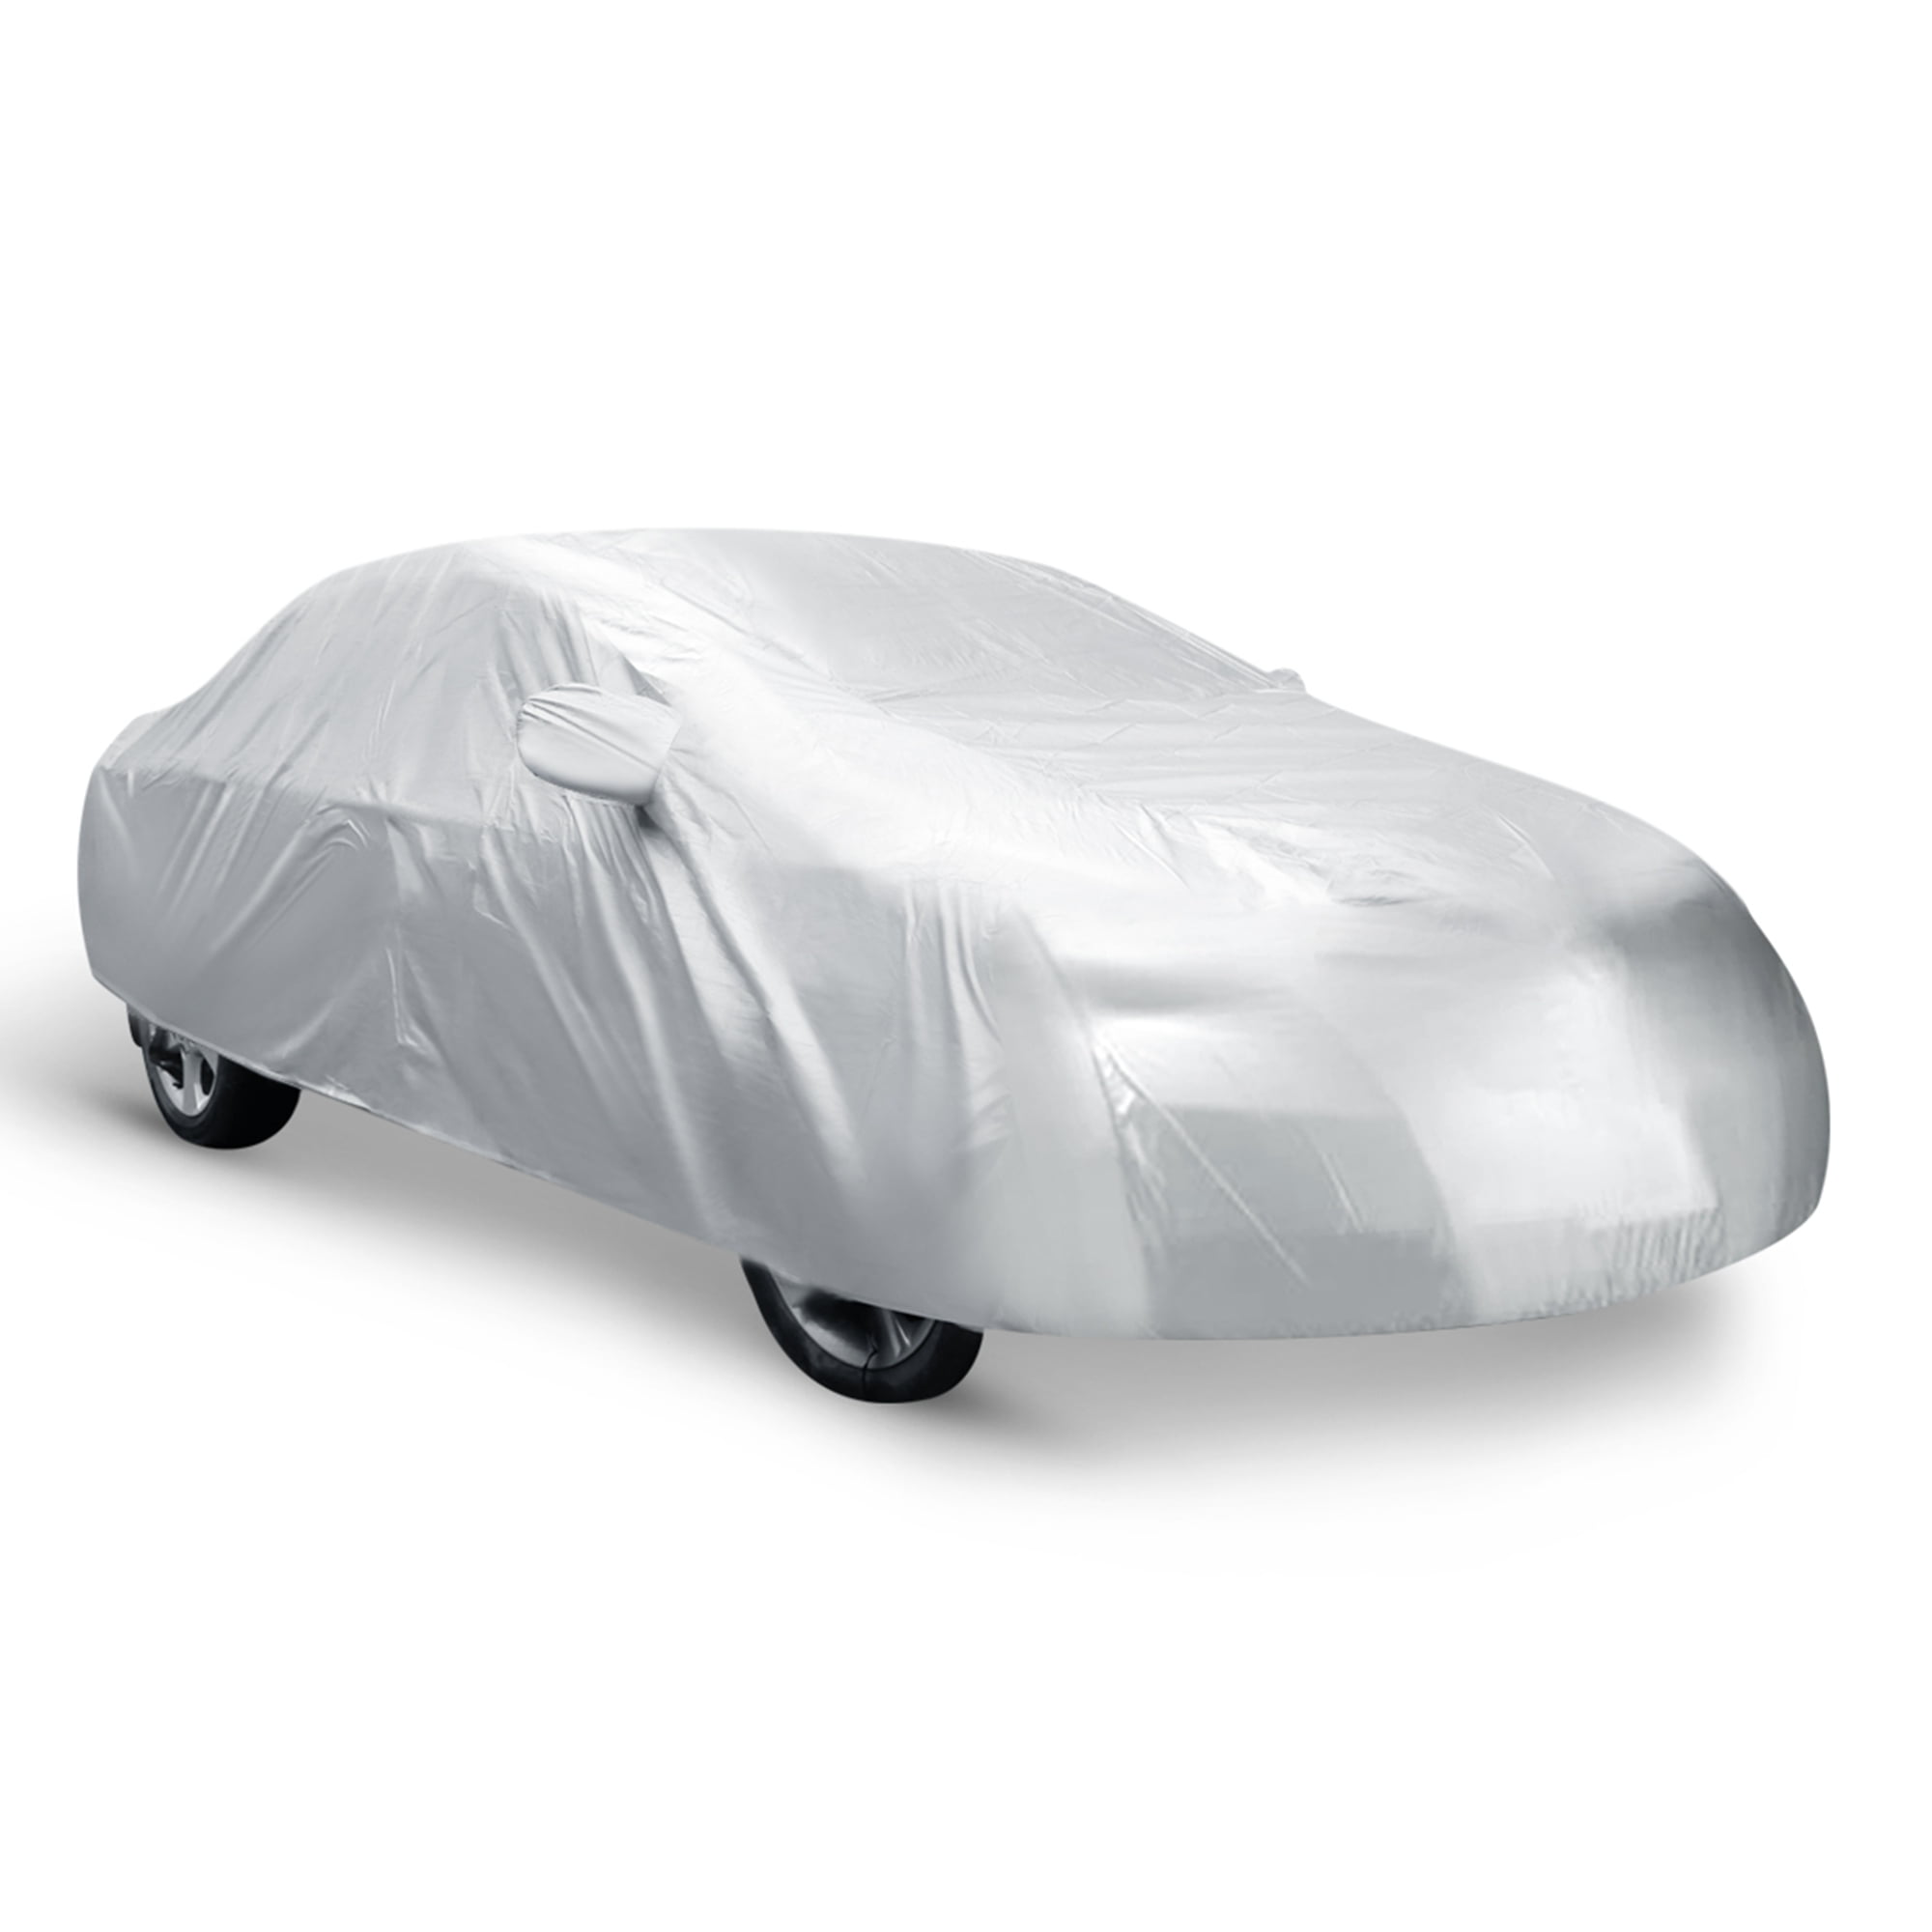 Car Cover Waterproof for Peugeot 208/208 GTI/e-208  